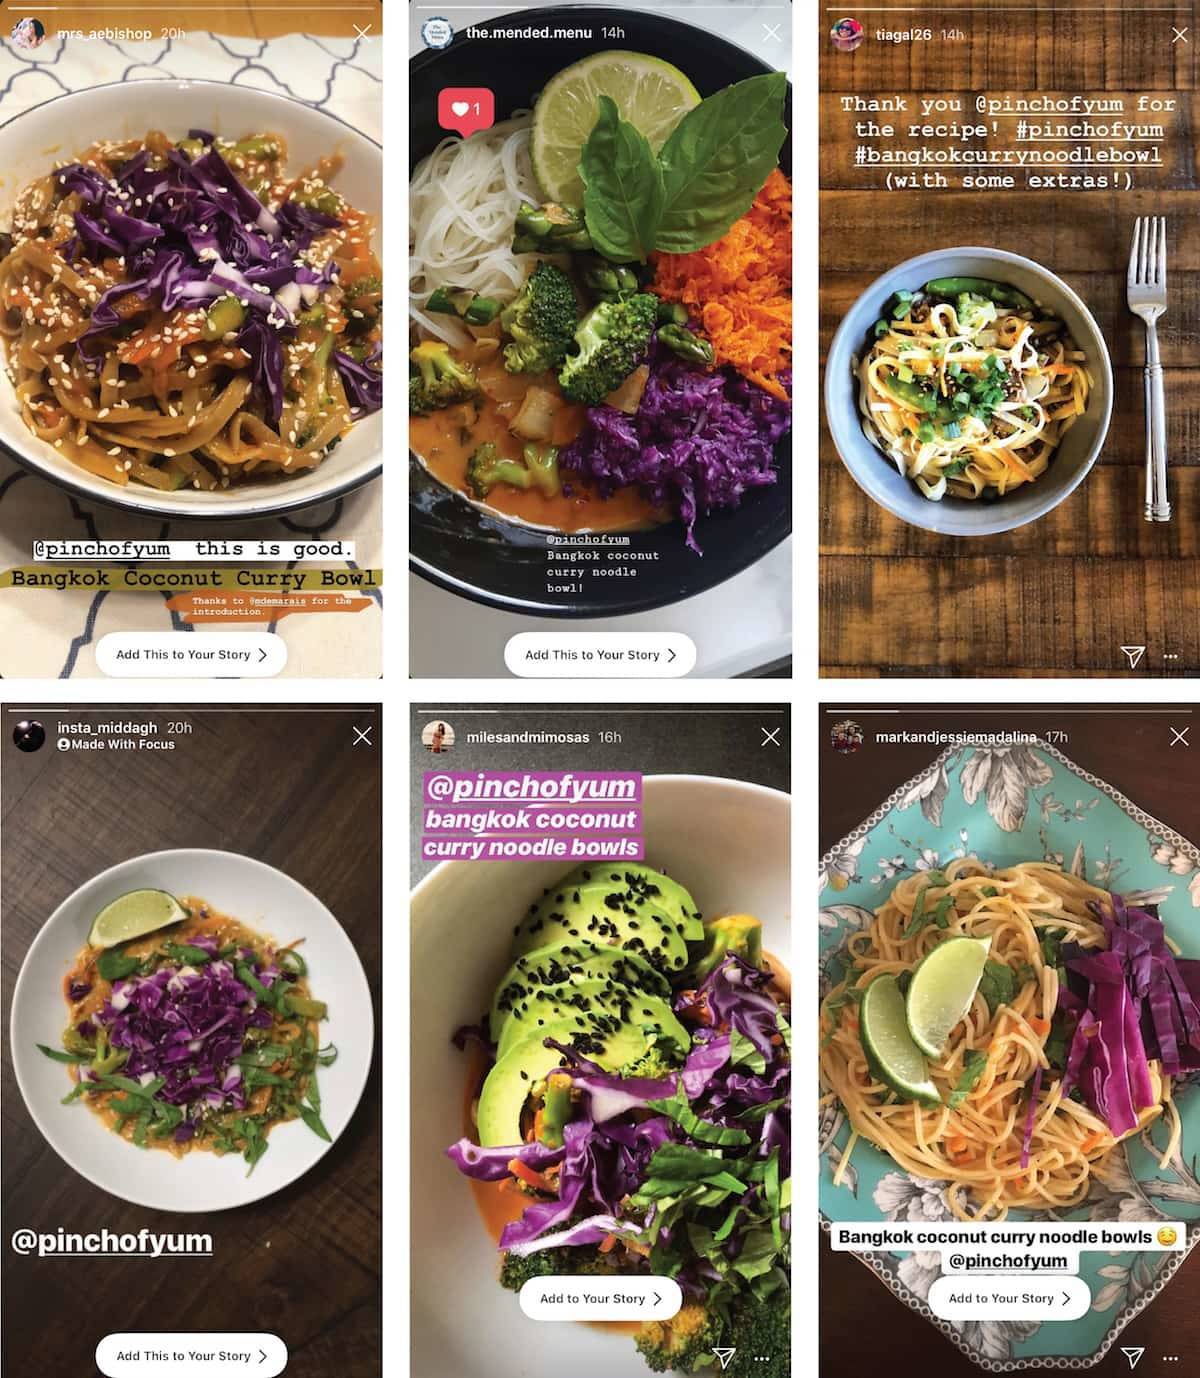 Instagram images of Bangkok Coconut Curry Noodles.